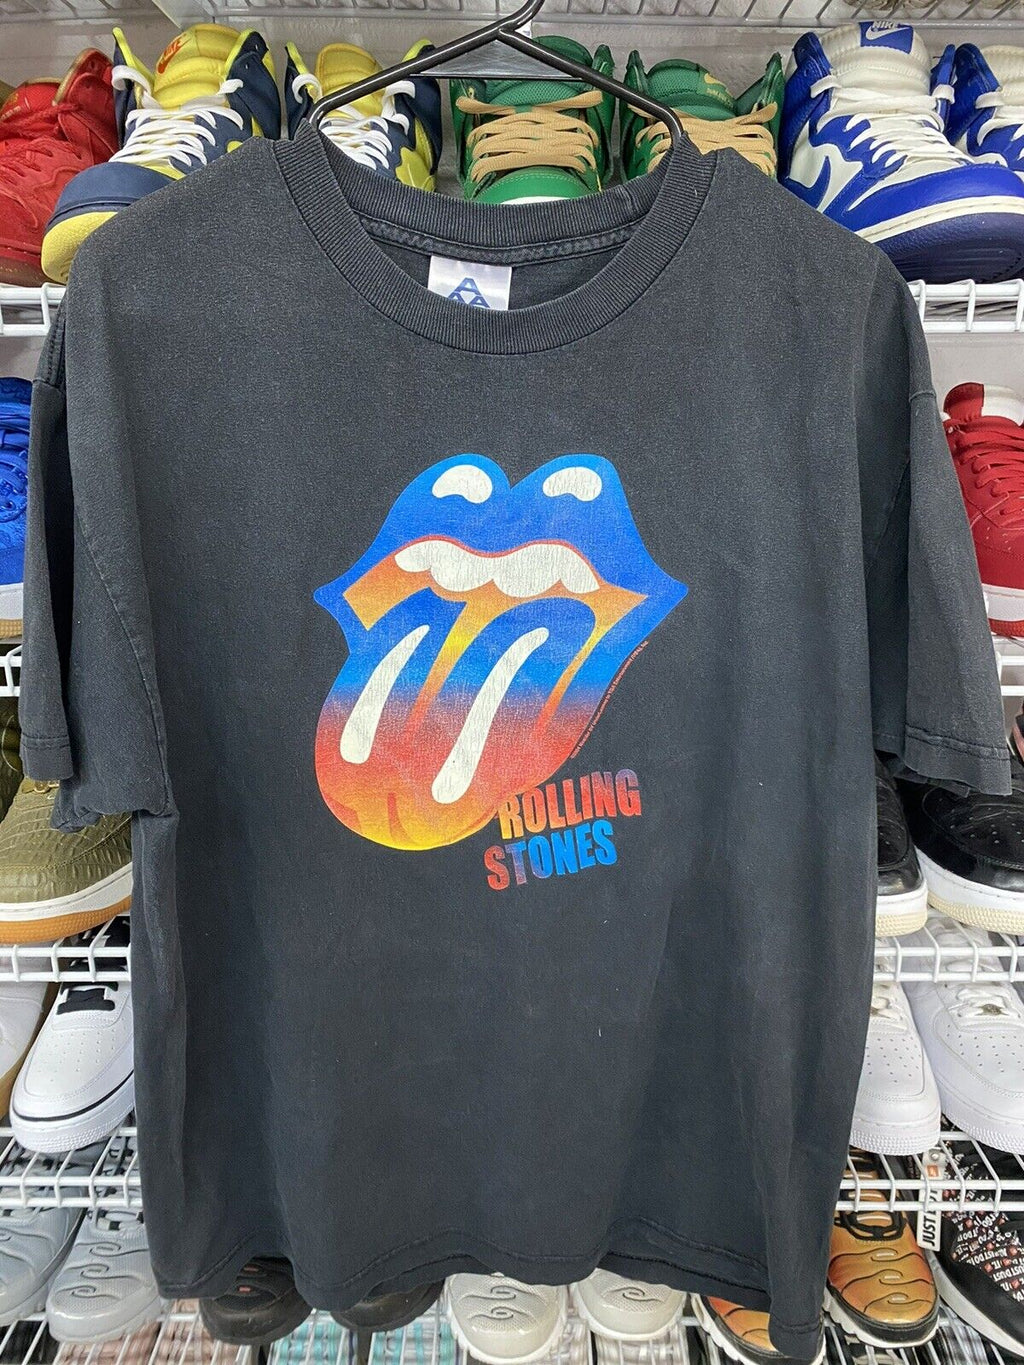 Rolling Stones Get your Licks Rt 66 Album Black Vintage T-shirt Size Large - Hype Stew Sneakers Detroit